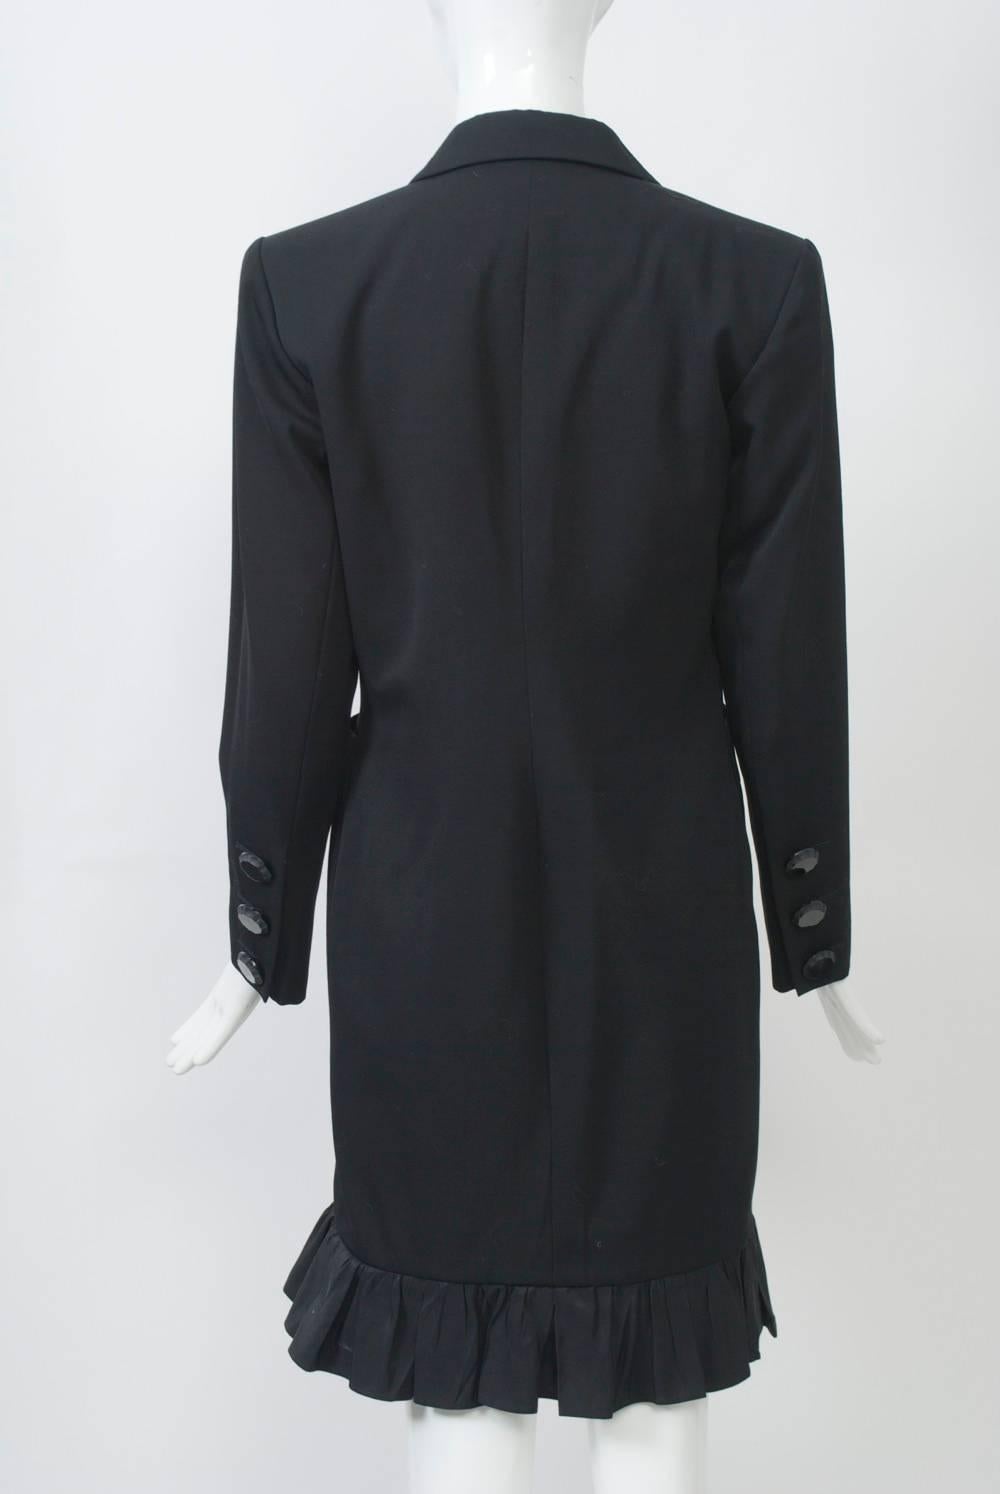 Women's YSL Black Coat Dress with Ruffle